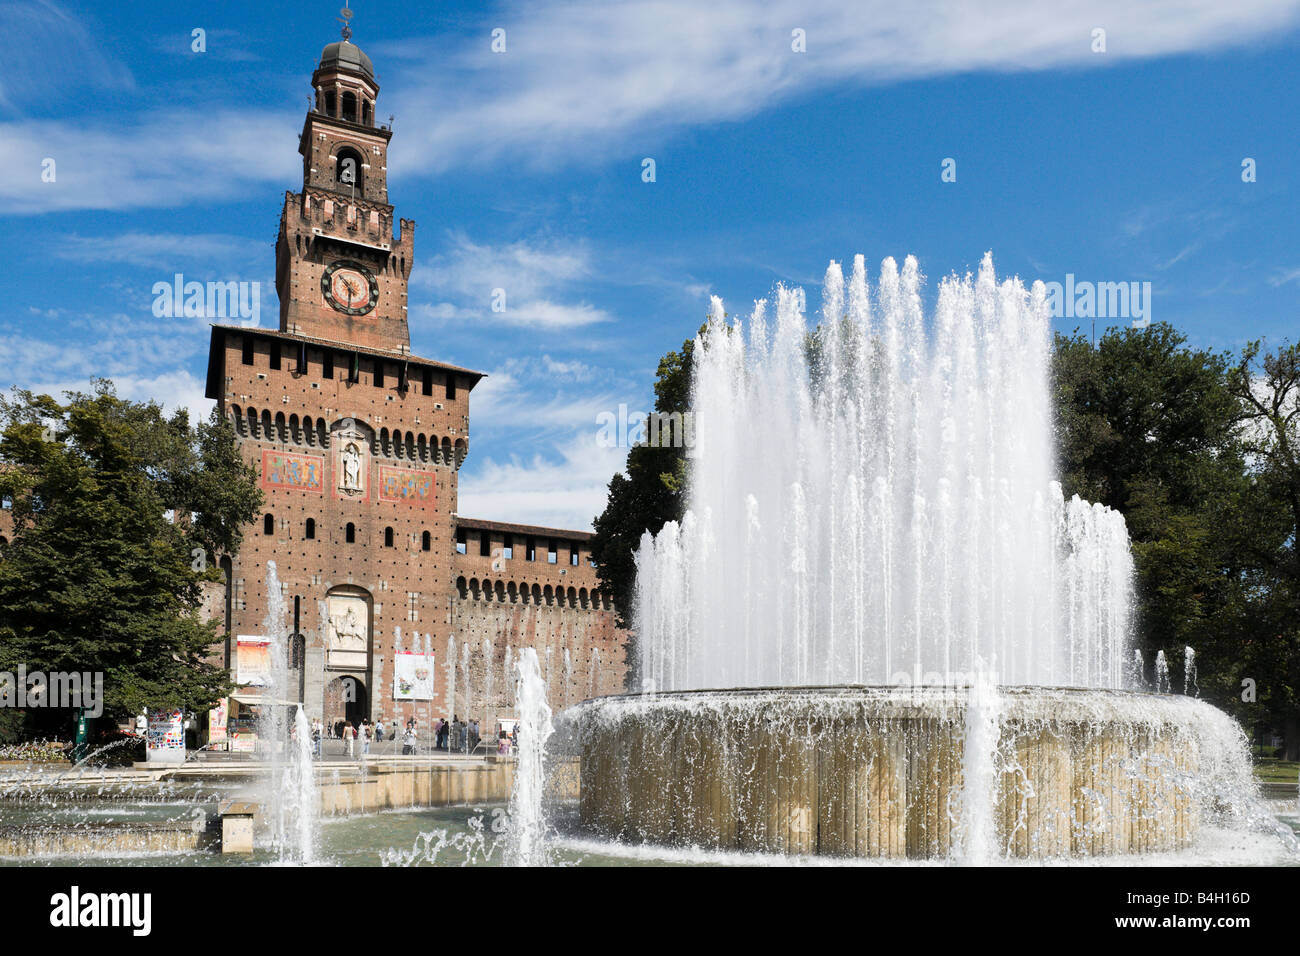 Fountain in front of the entrance to Castello Sforzesco, Milan, Lombardy, Italy Stock Photo